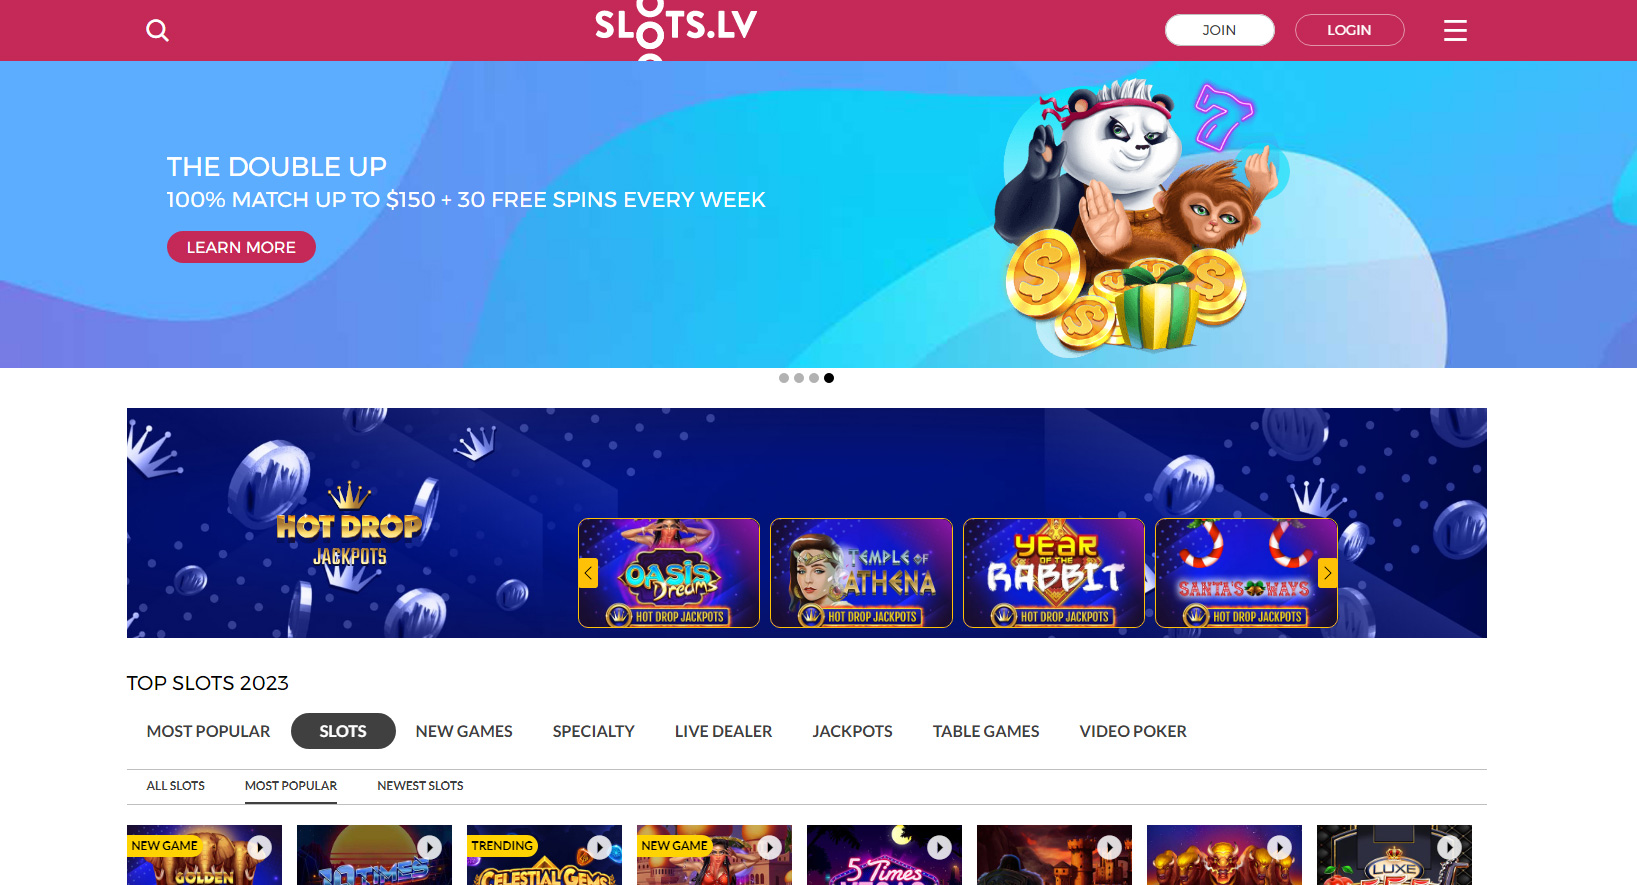 Slots.LV Website